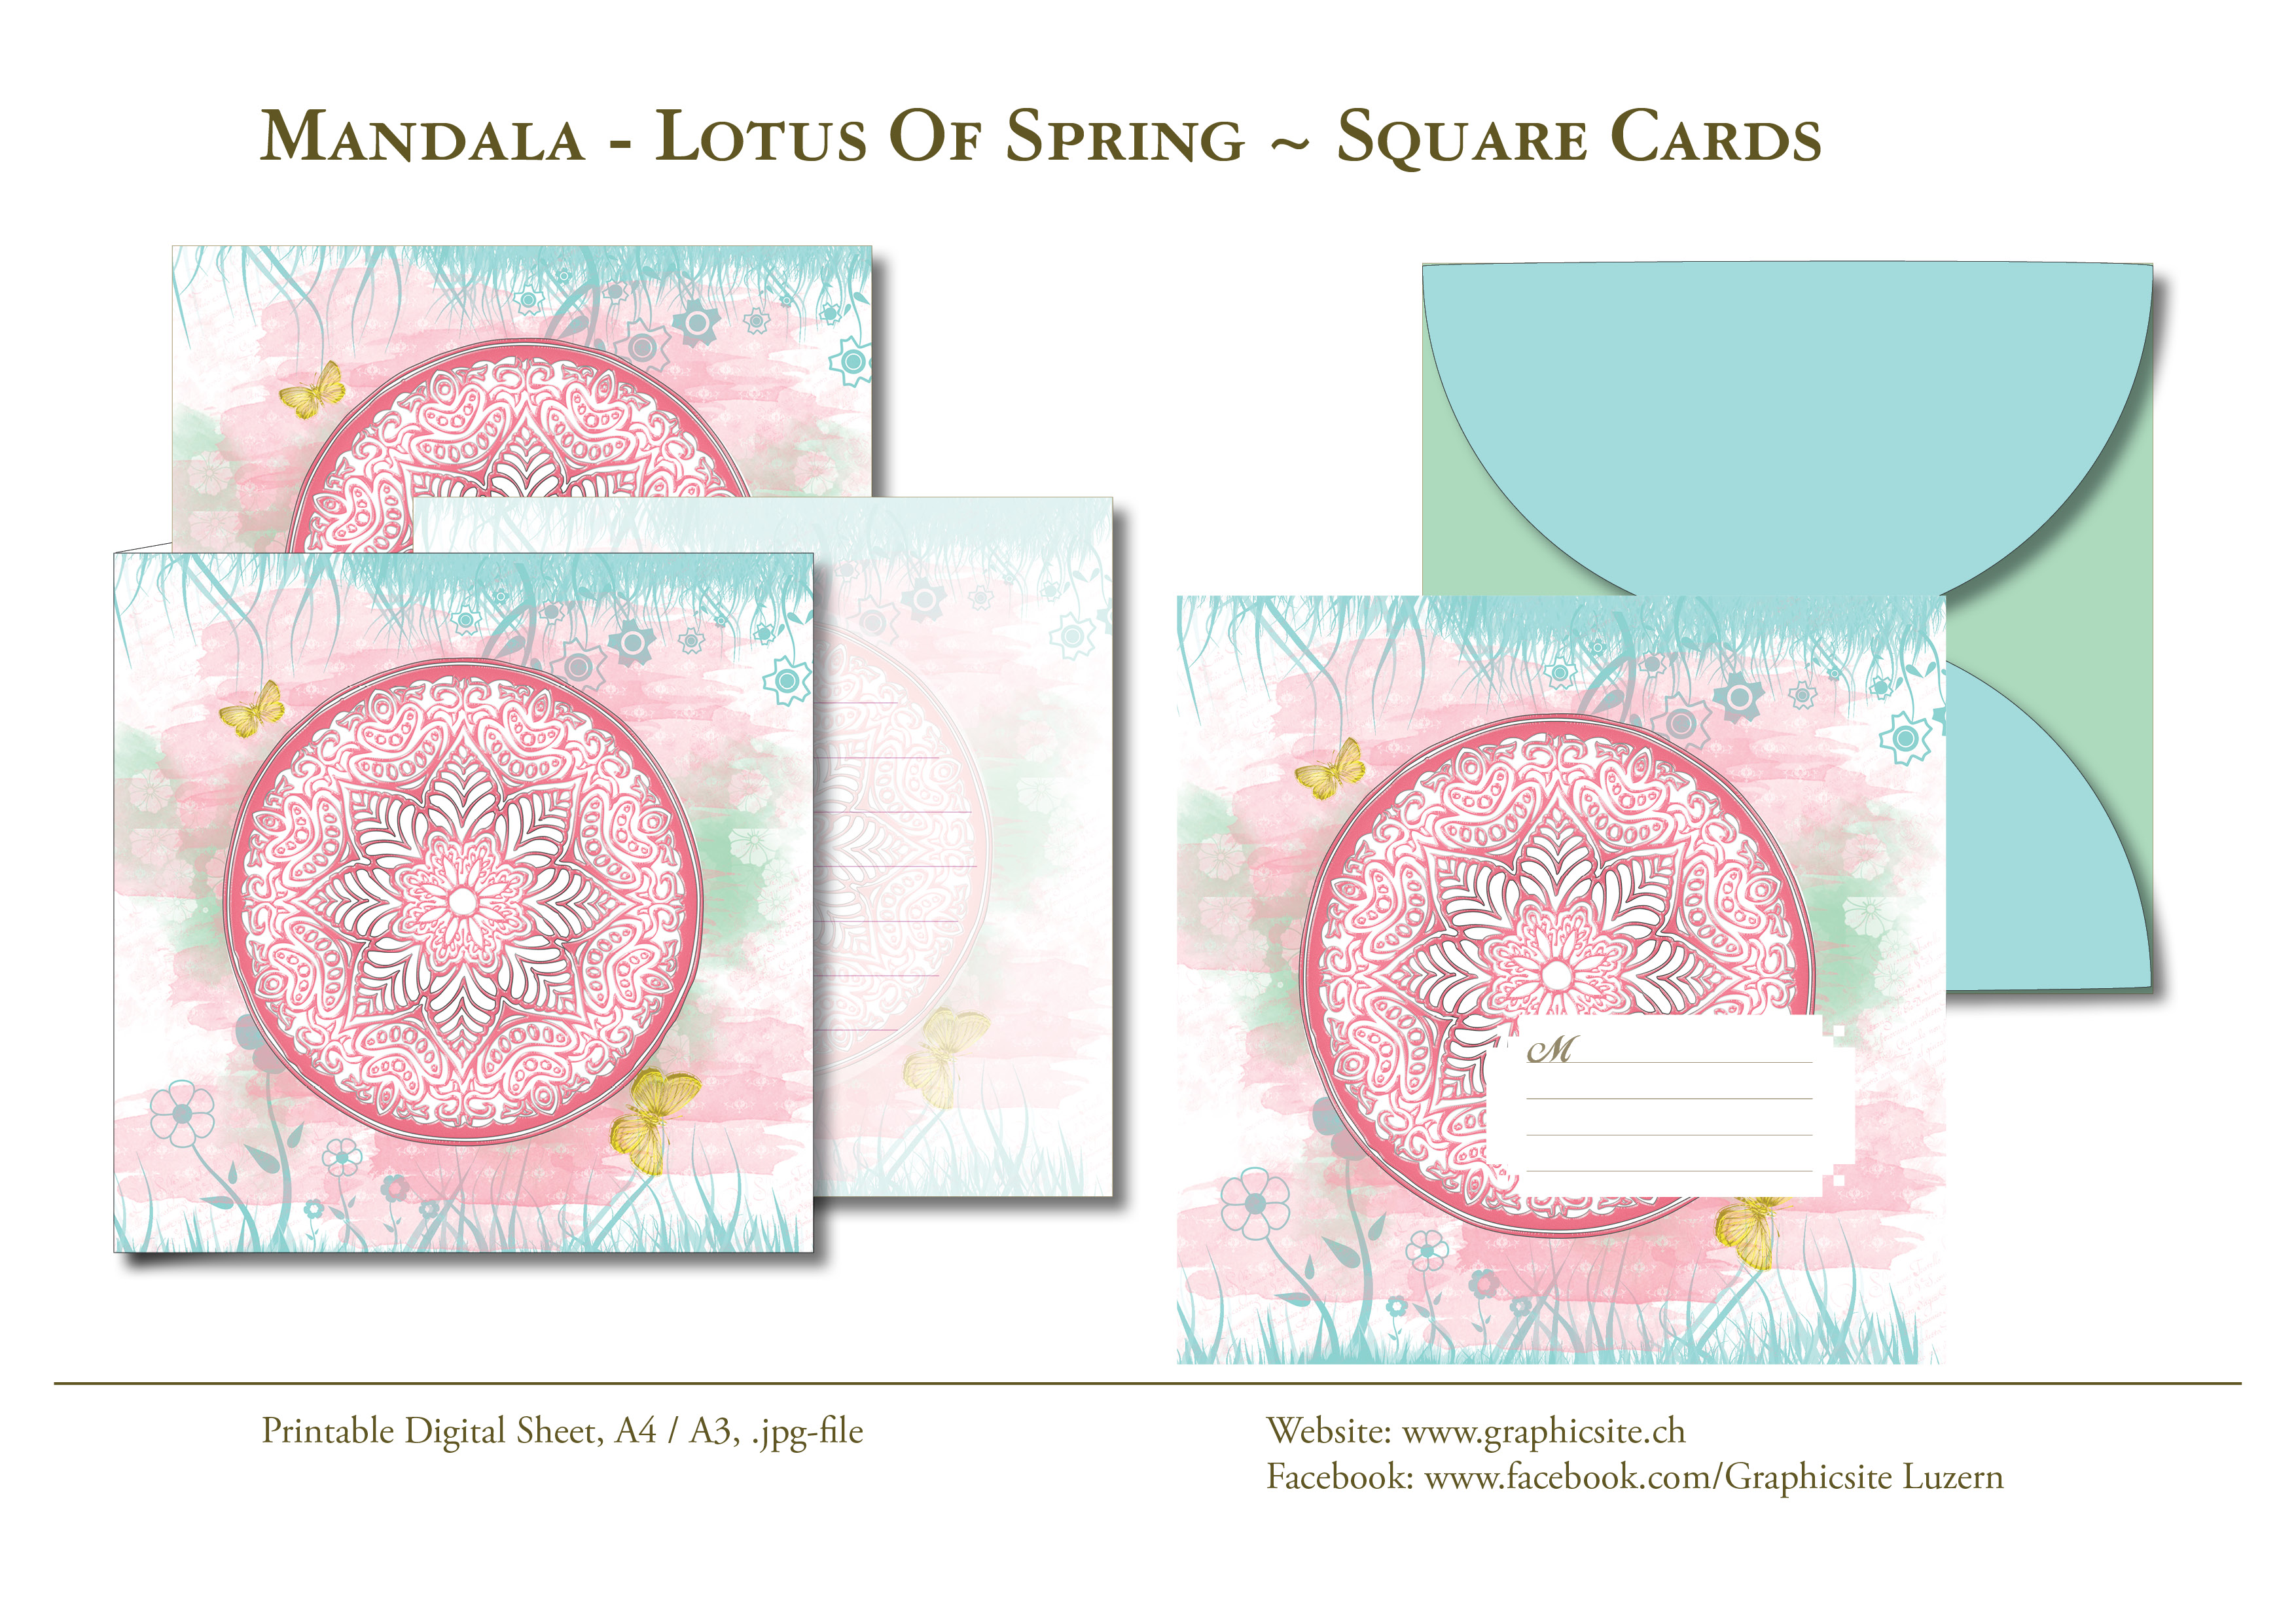 Printable Digital Sheets - Square Cards - MANDALA LotusOfSpring, Greeting Cards, Yoga, Meditation, Cards, Watercolor, Digital painting, Graphic Design, Luzern